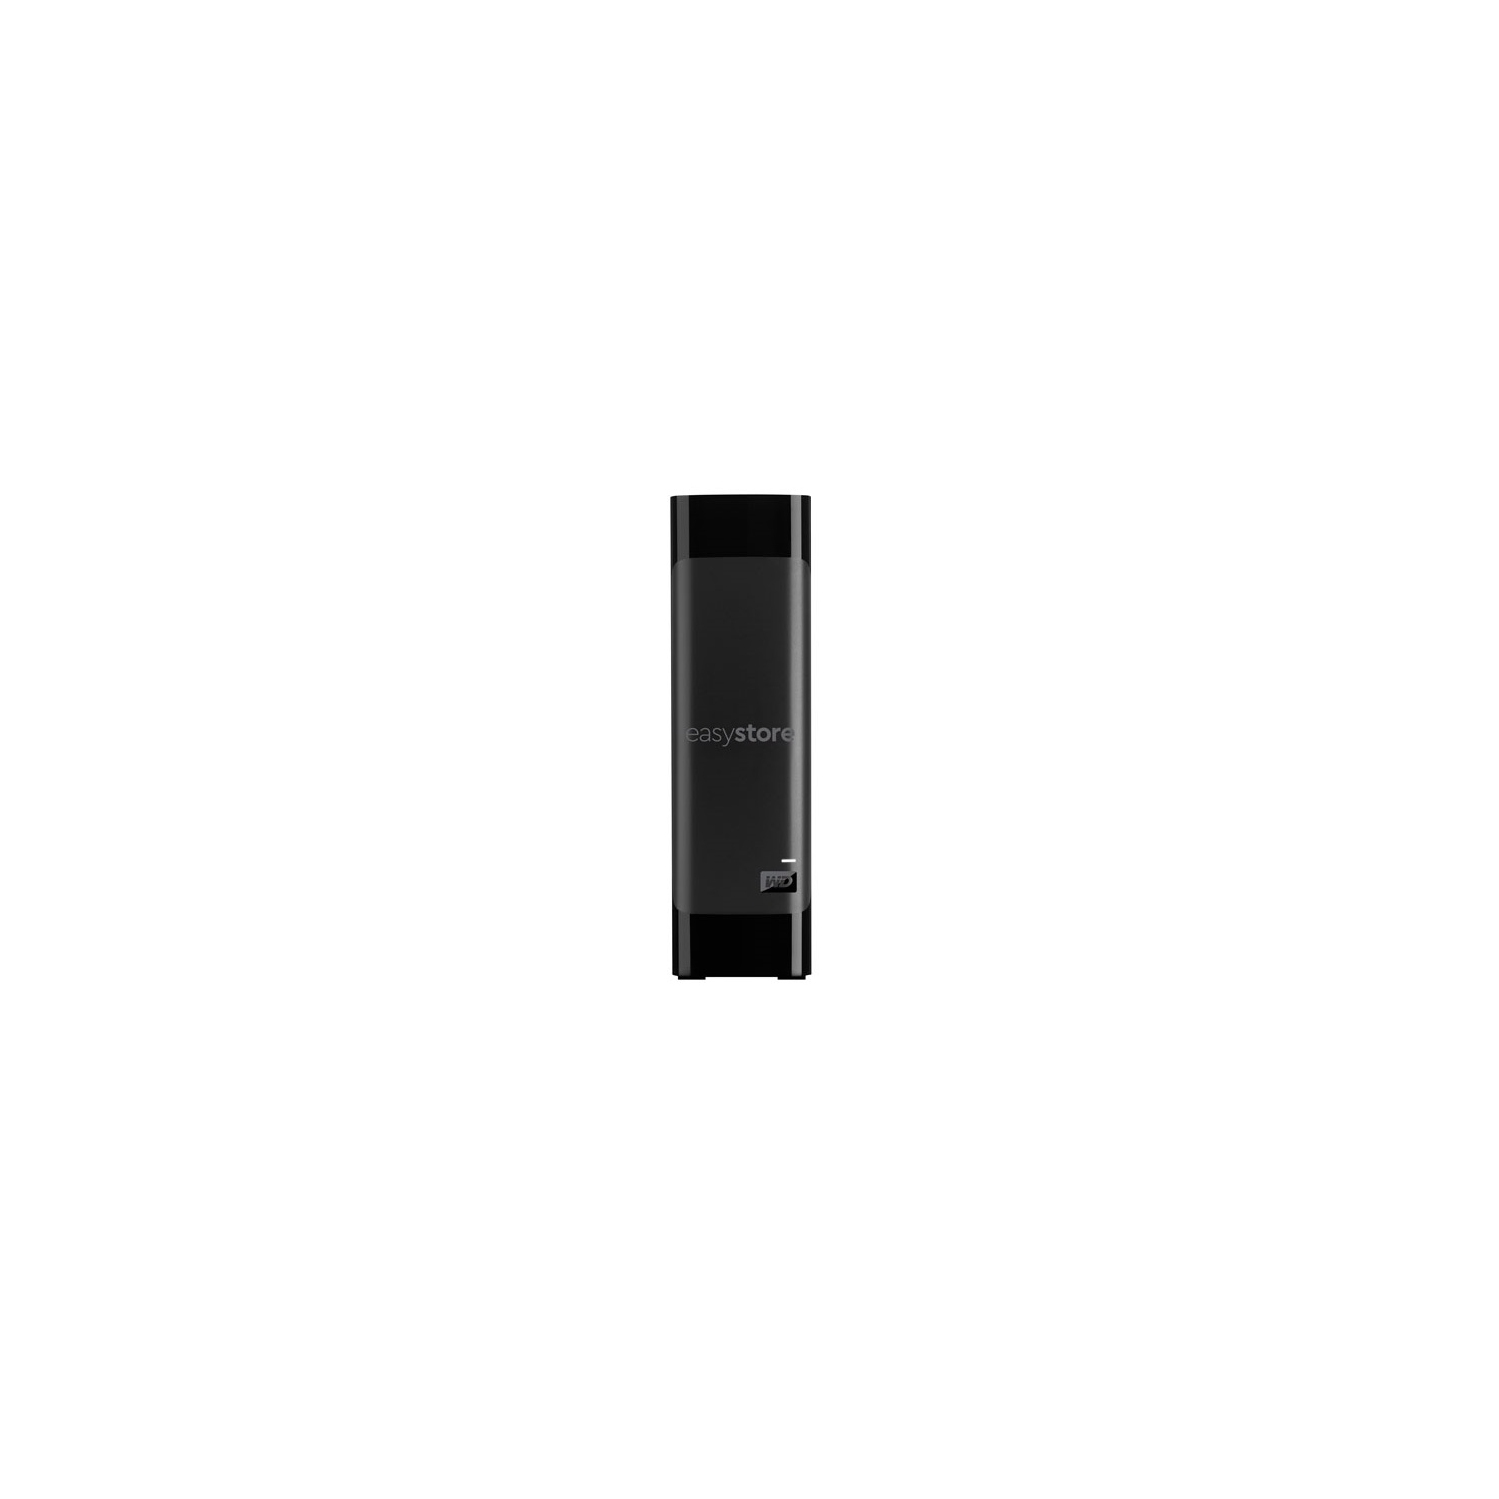 Refurbished (Good) WD easystore 14TB USB 3.0 Black Desktop External Hard Drive